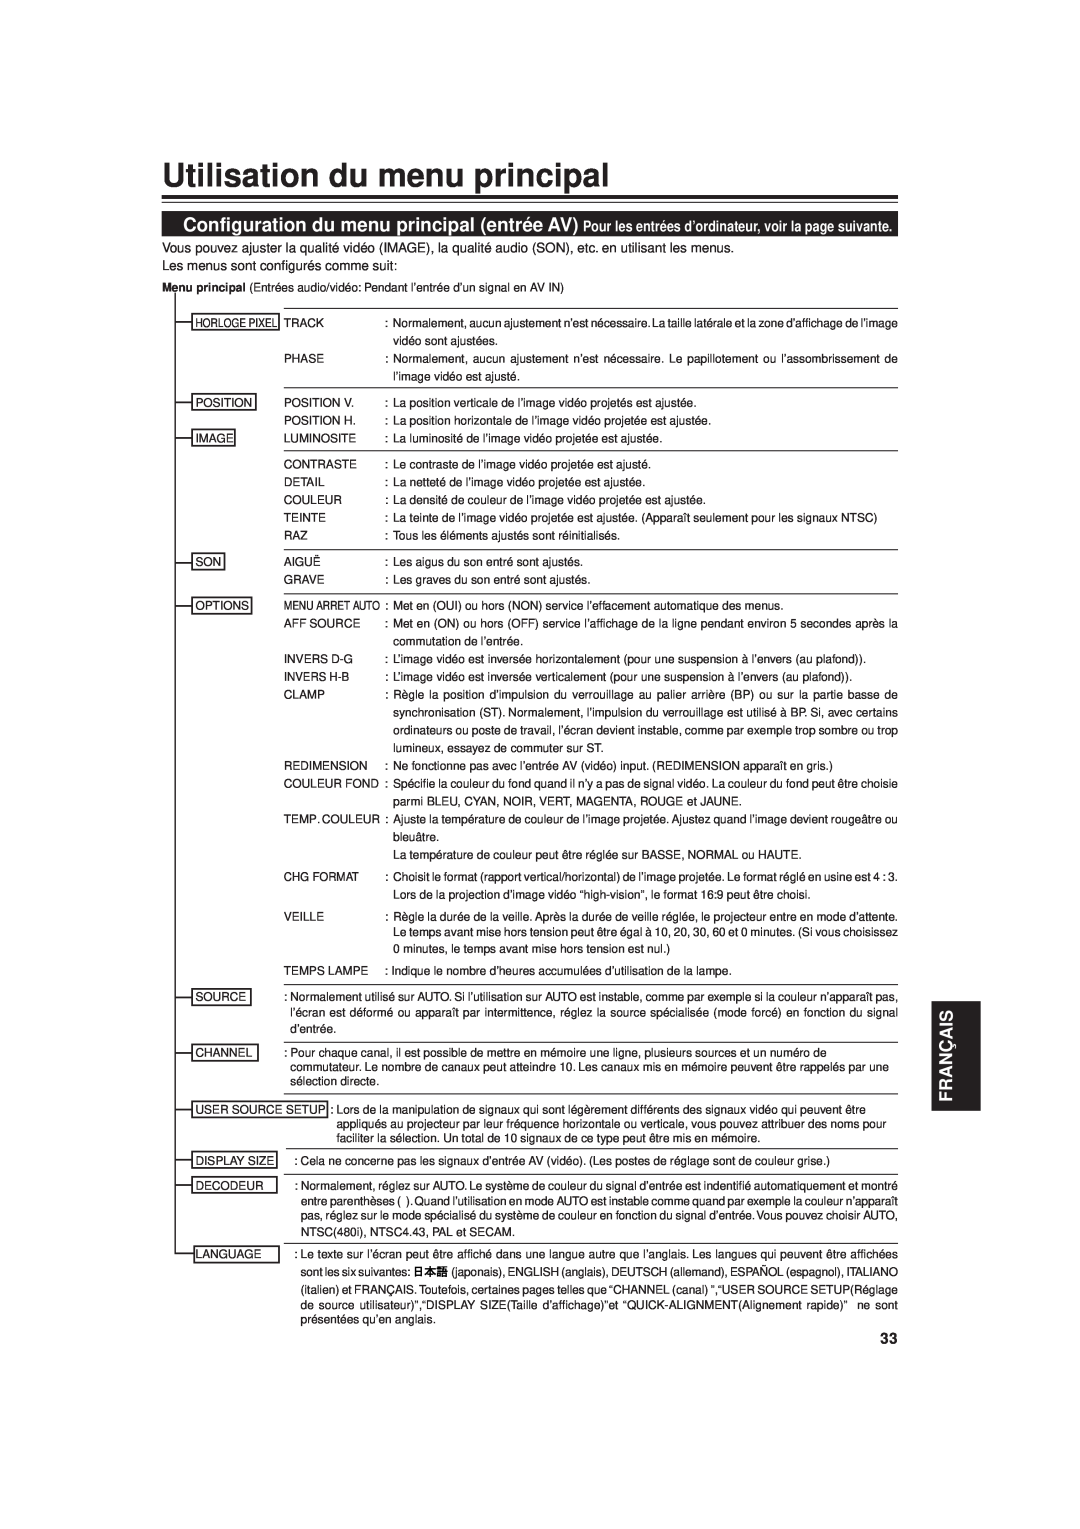 JVC DLA-G20U manual Utilisation du menu principal, Français 